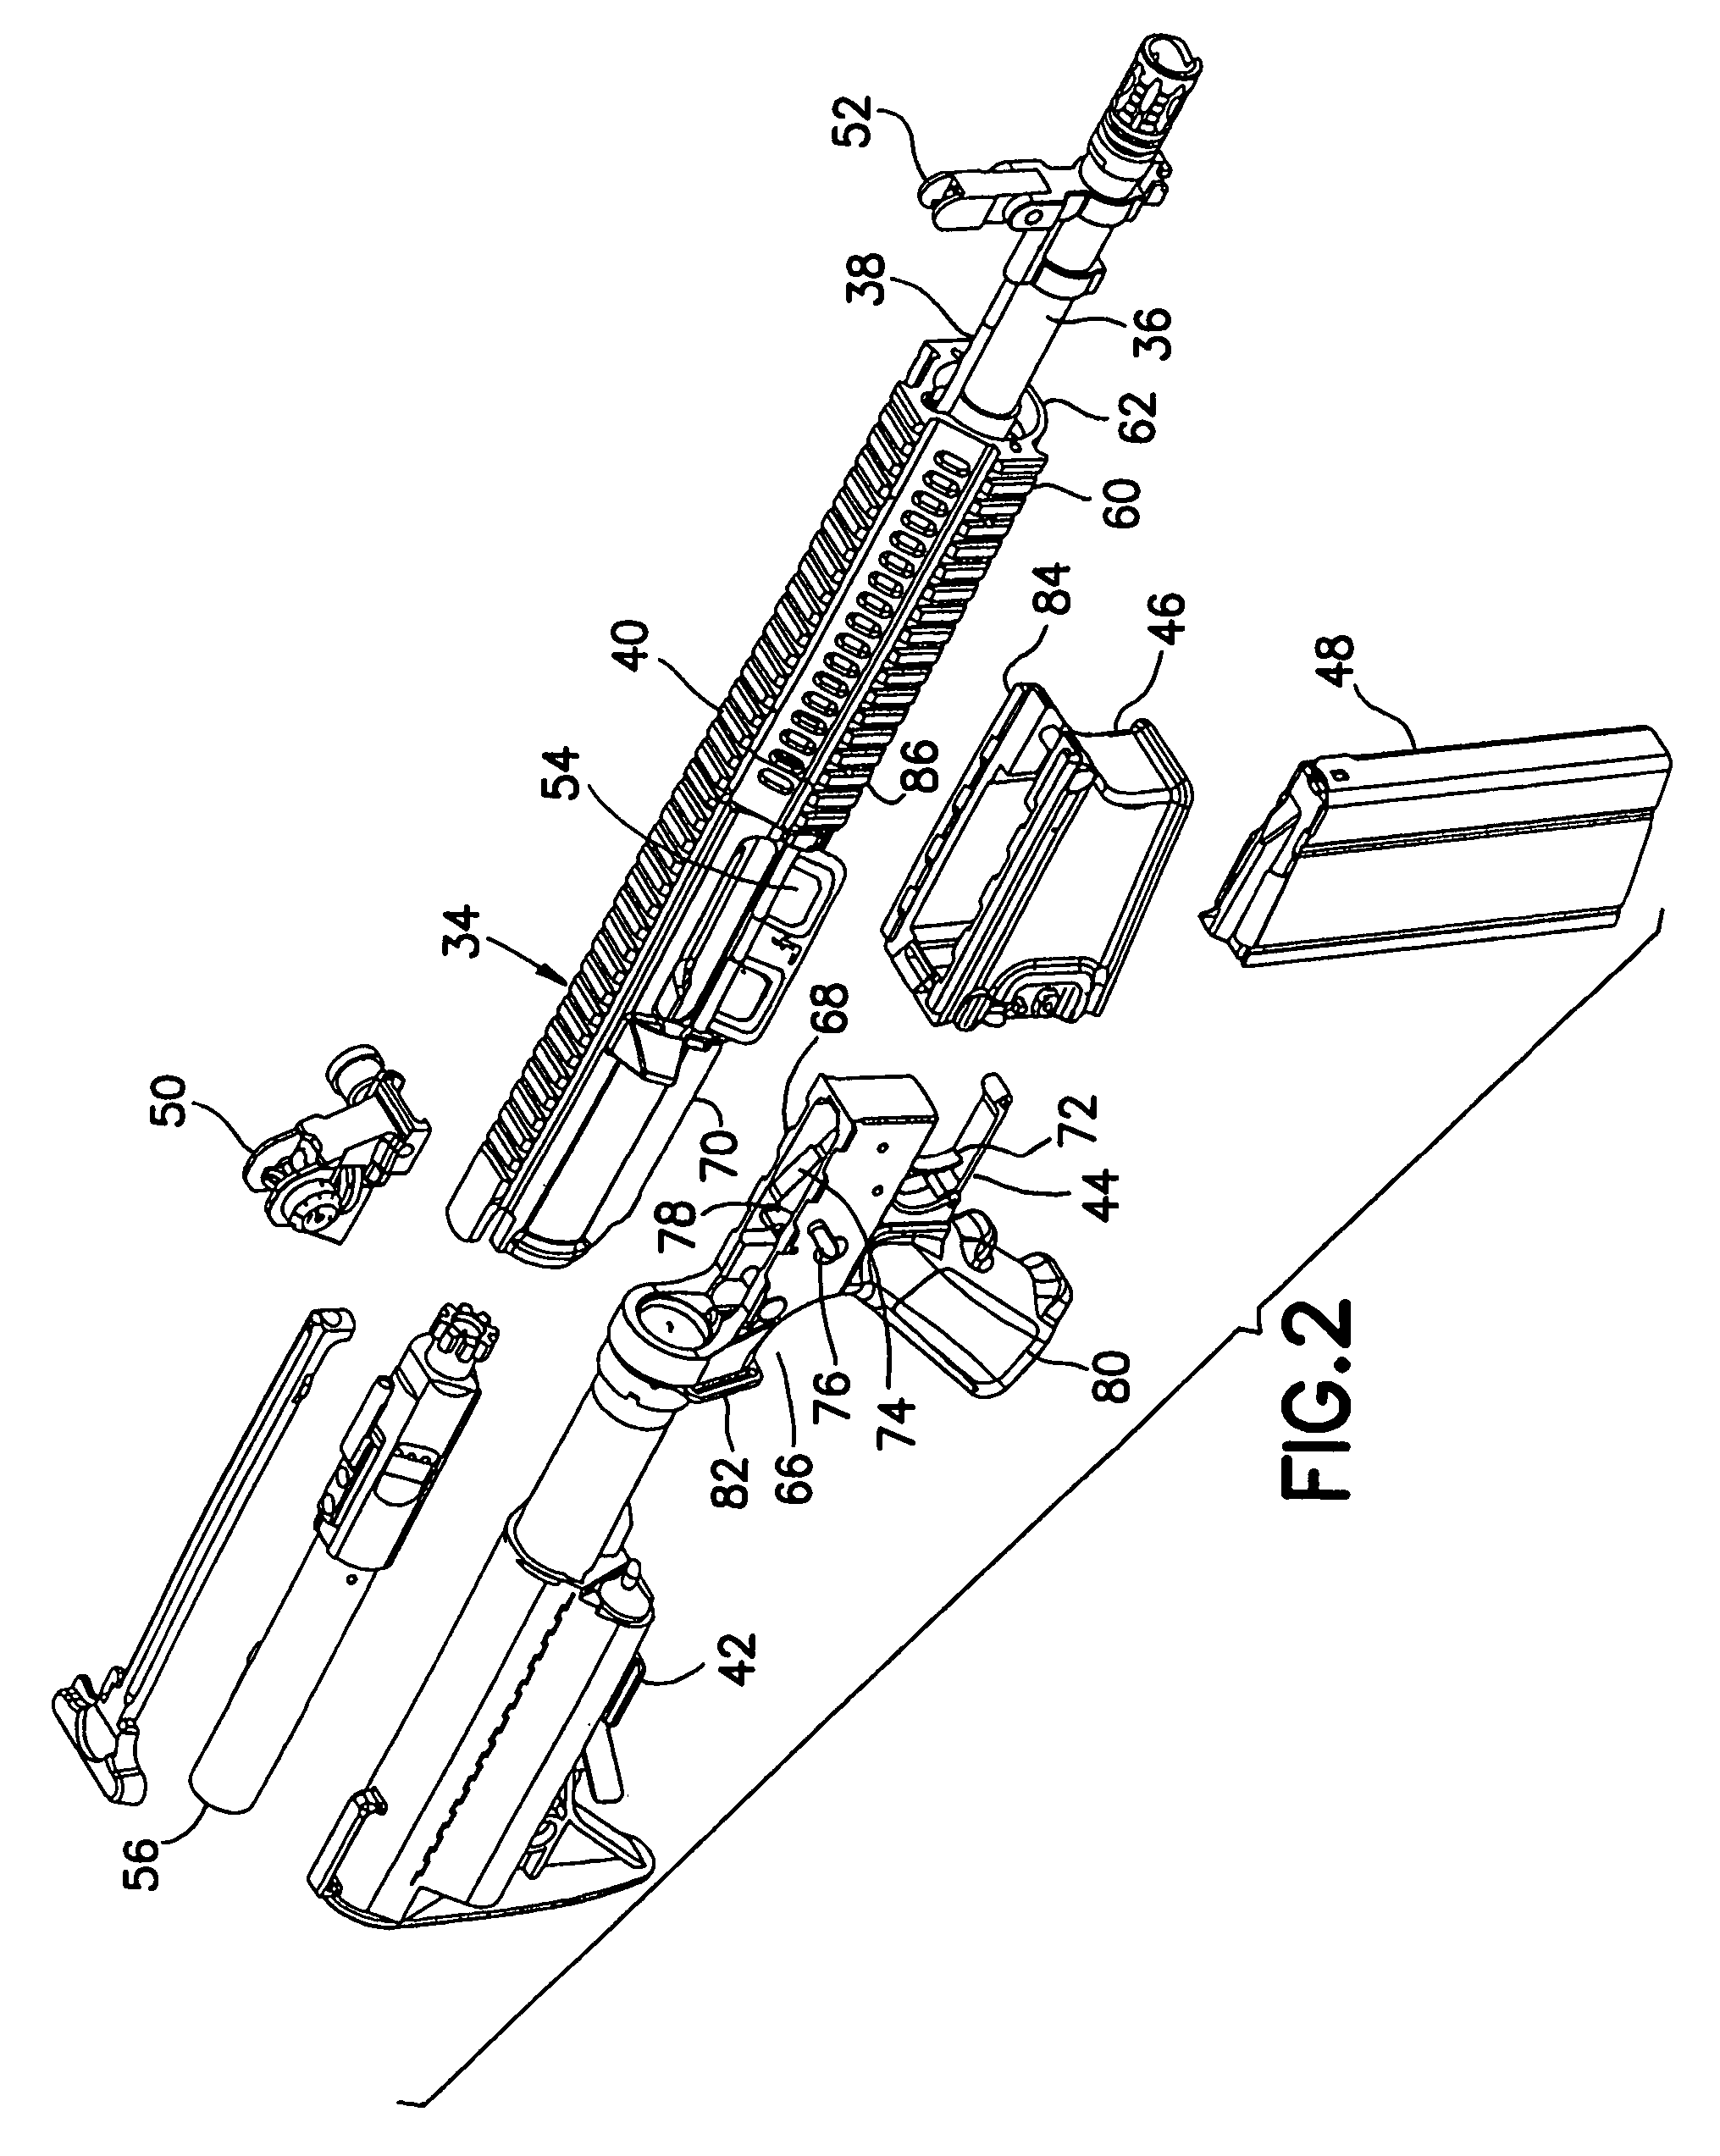 Modular firearm